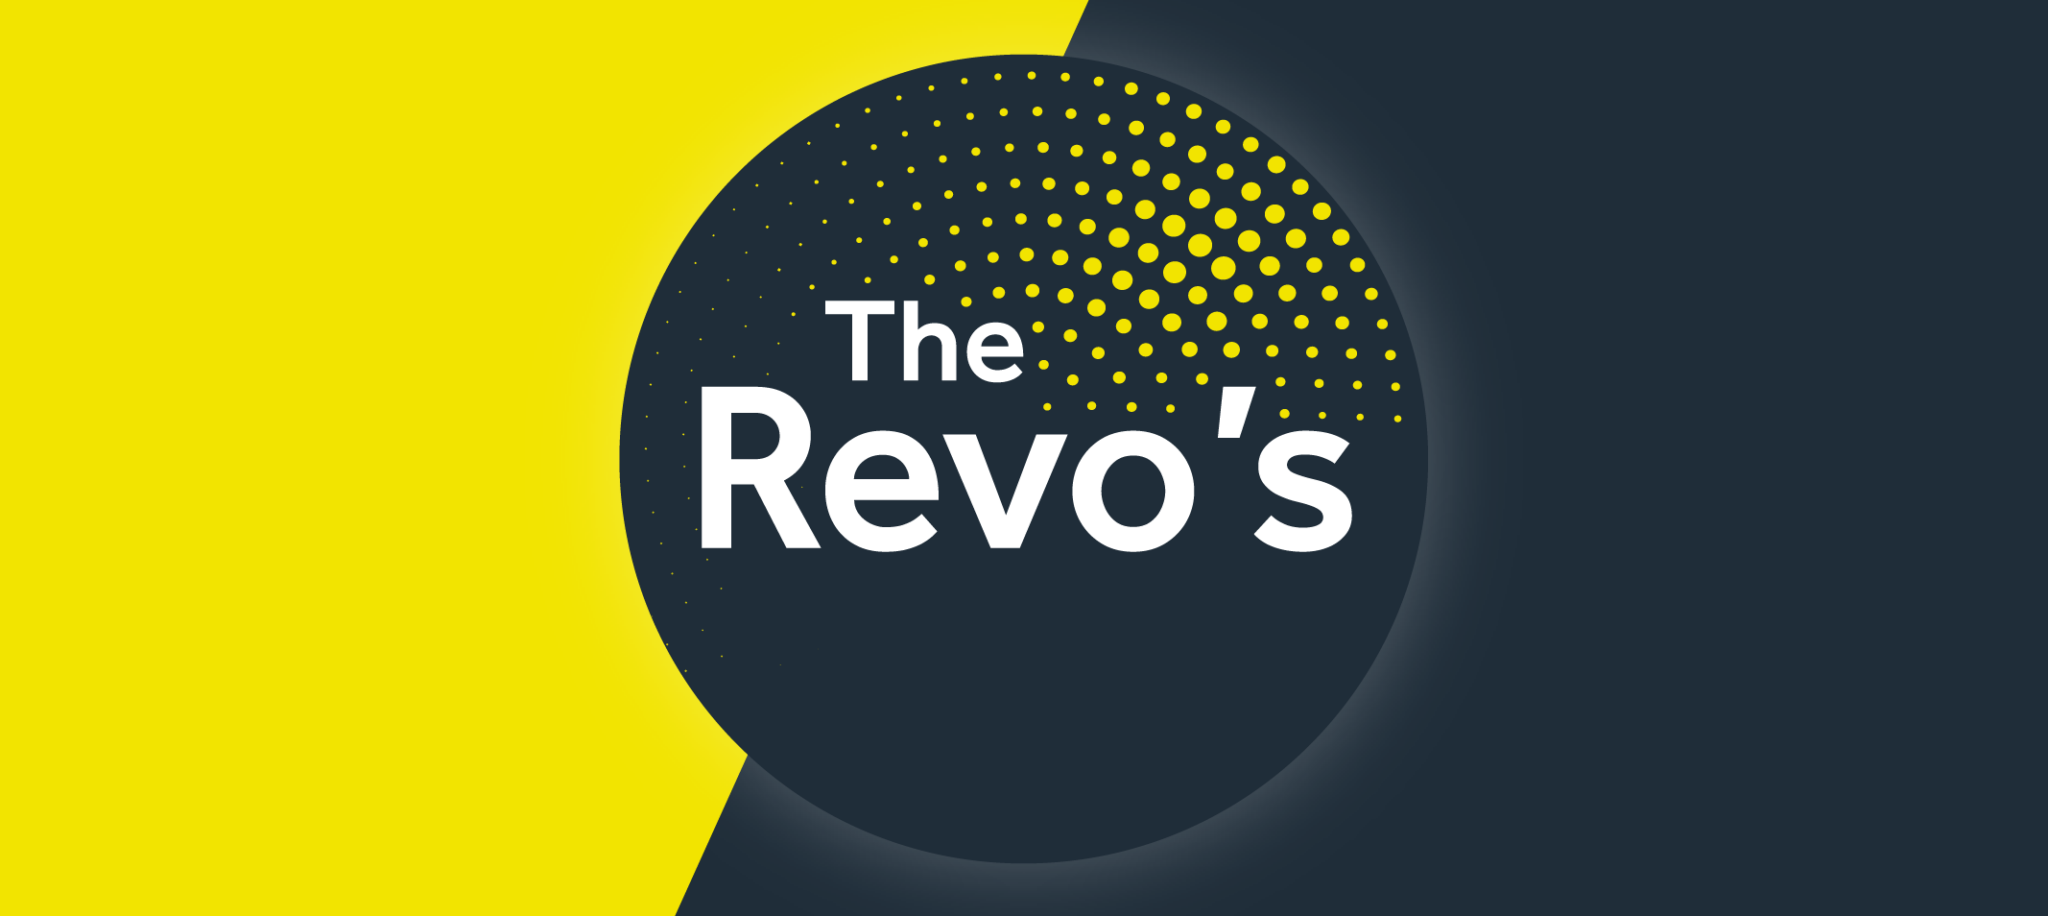 Revo_TheRevos_Announcement_Websites_1024x458 copy (2)